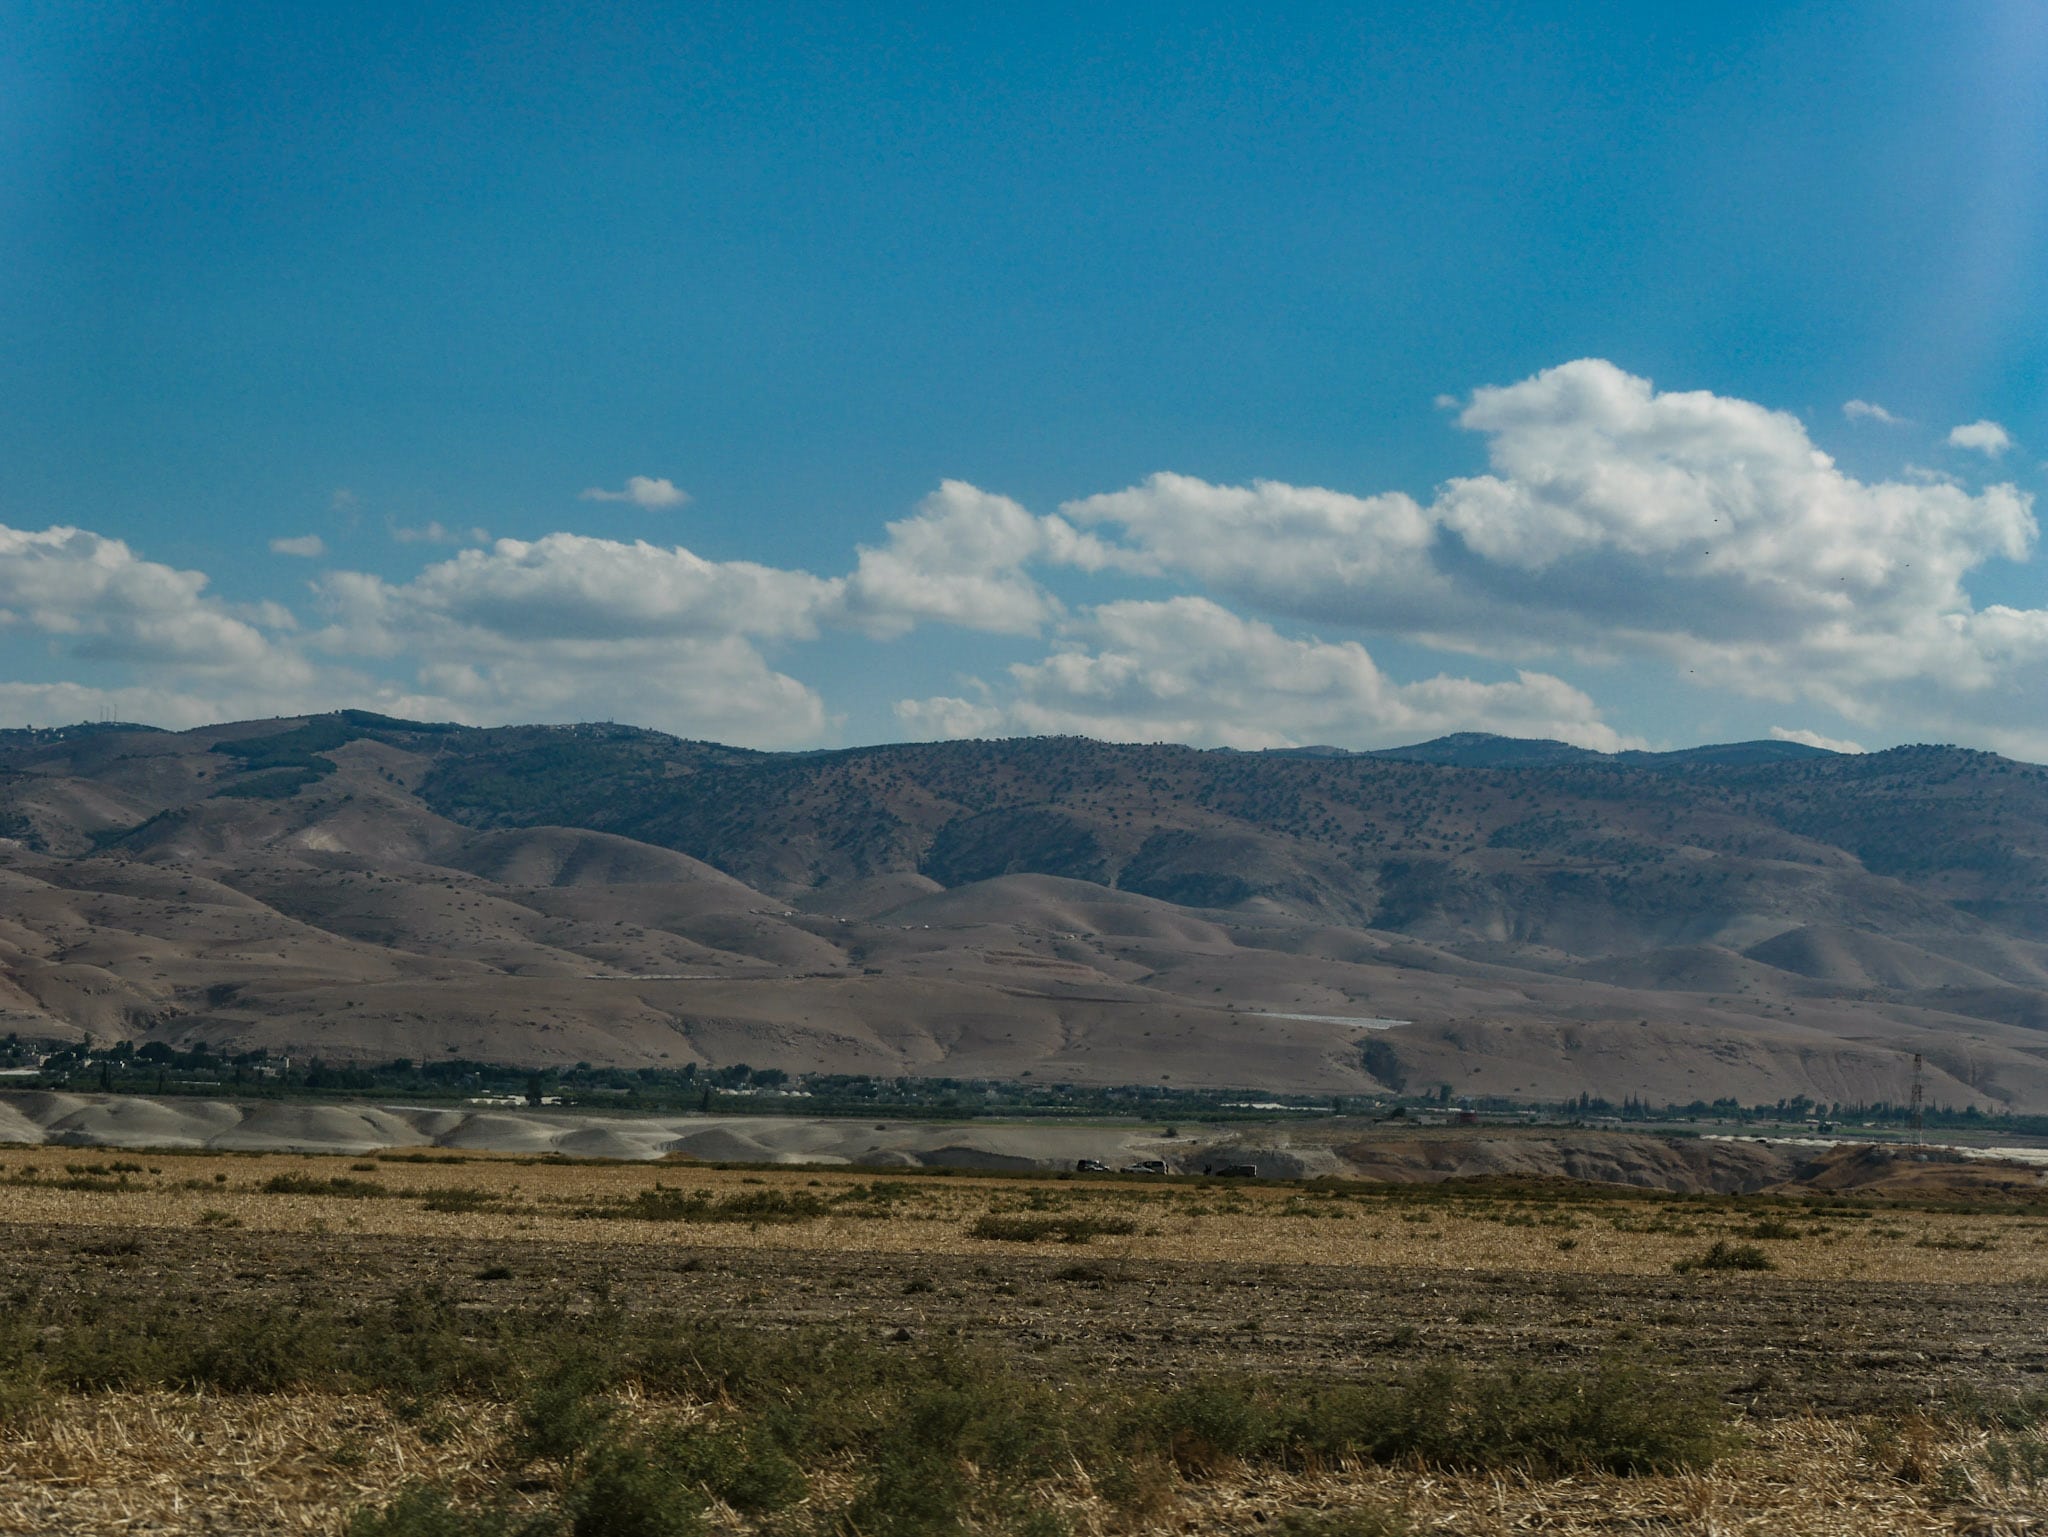 The Jordan Valley